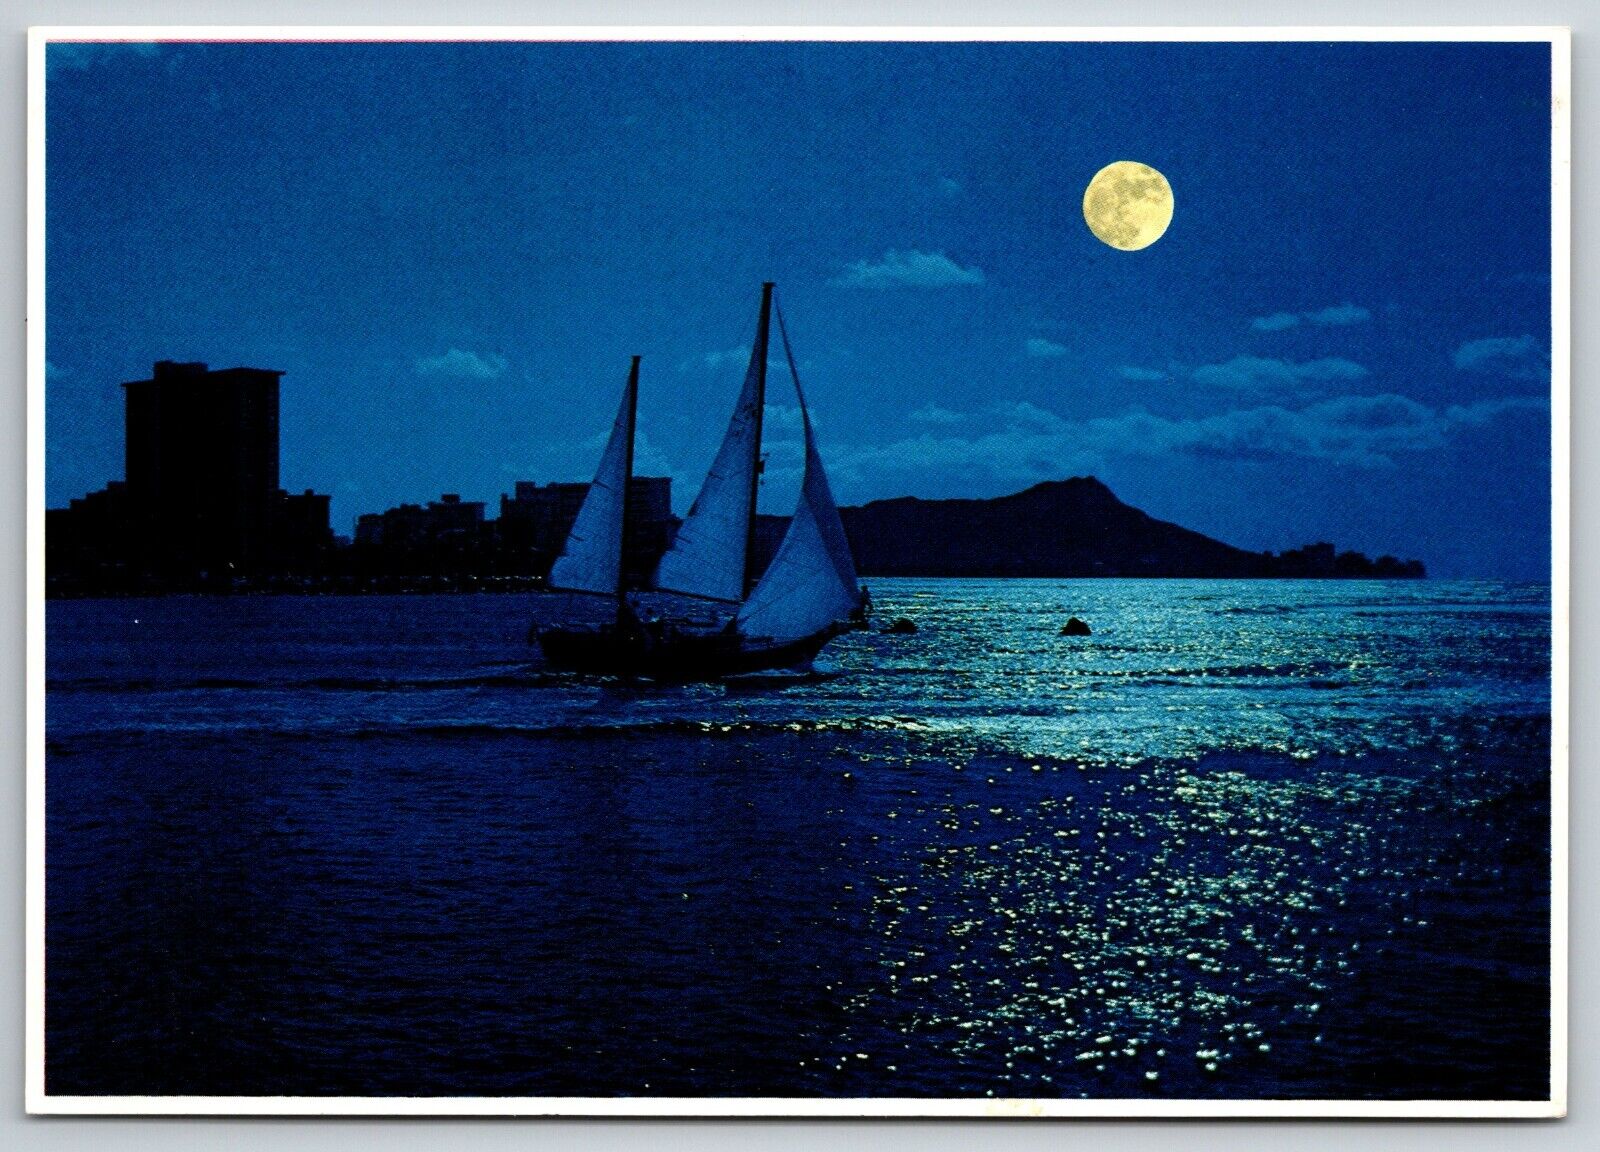 Sailing in Moonlight Diamond Head Honolulu Hawaii  5.8x4.2 Postcard Wagner